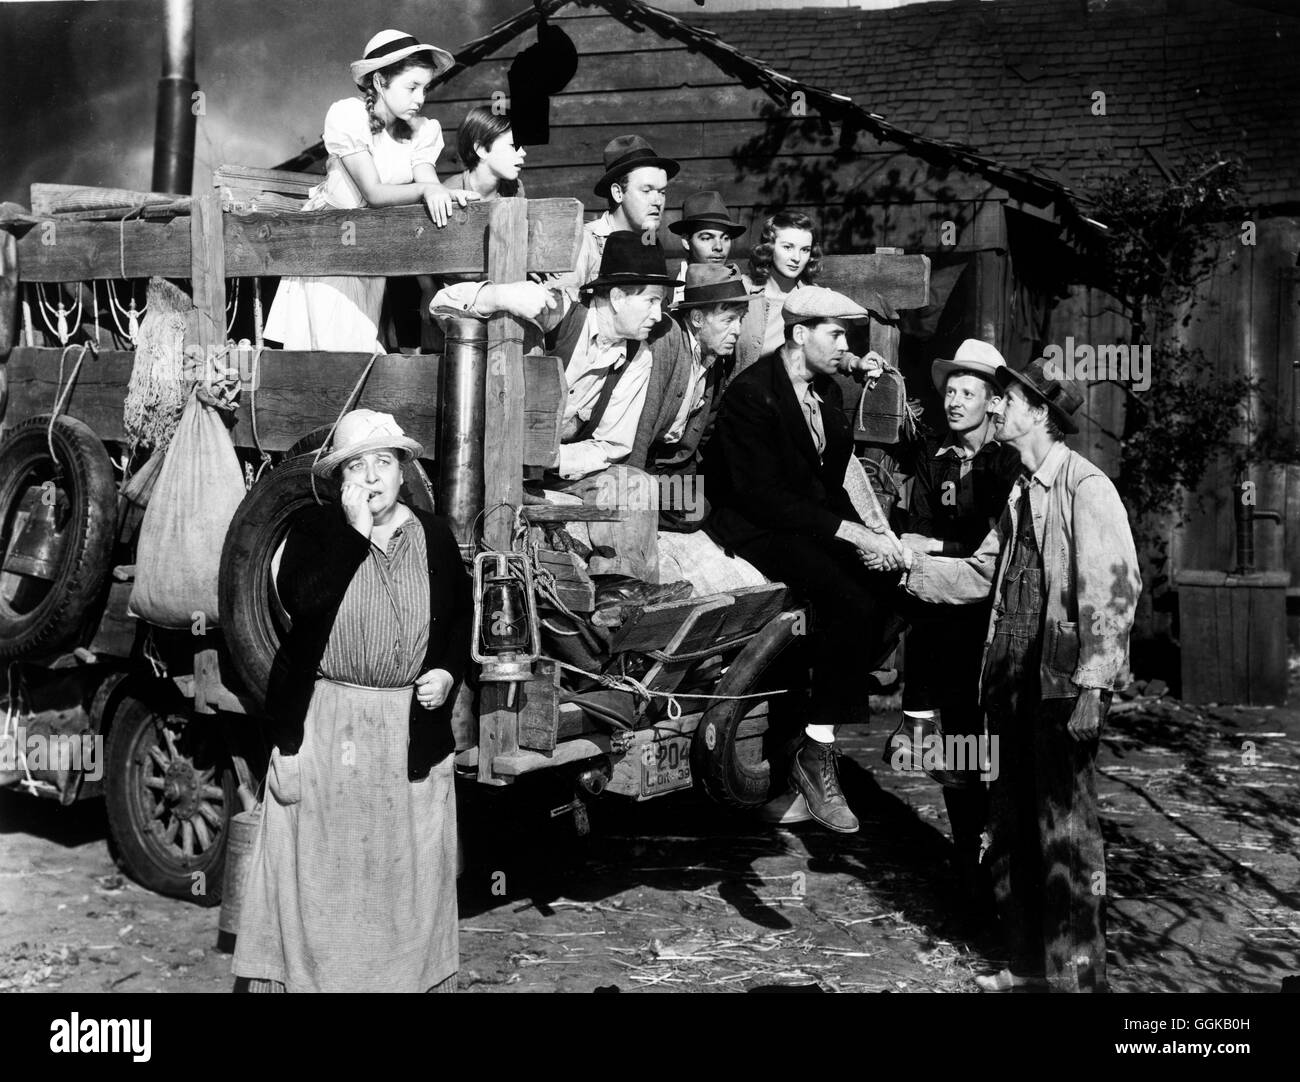 FRüCHTE DES ZORNS / The Grapes of Wrath USA 1940 / John Ford Szene mit JANE DARWELL (Ma Joad), RUSSELL SIMPSON (Pa Joad), CHARLEY GRAPEWIN (Grandpa), HENRY FONDA (Tom Joad), JOHN CARRADINE (Casy) Regie: John Ford aka. The Grapes of Wrath Stock Photo